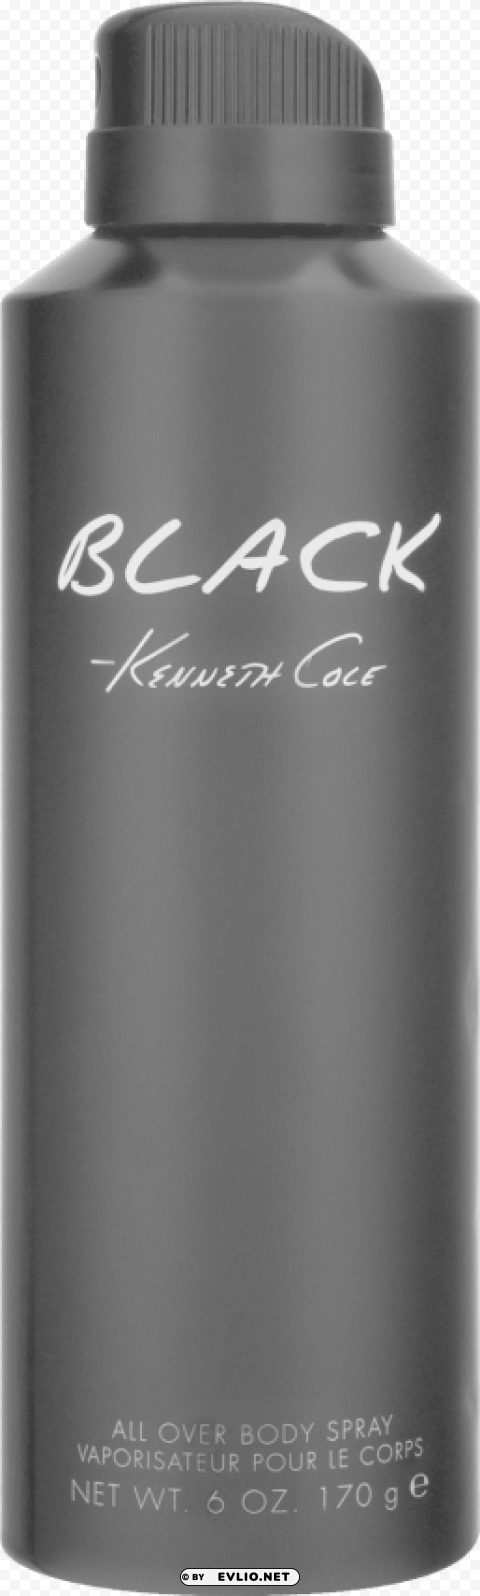 kenneth cole black for men edt spray 5 oz by kenneth PNG design elements